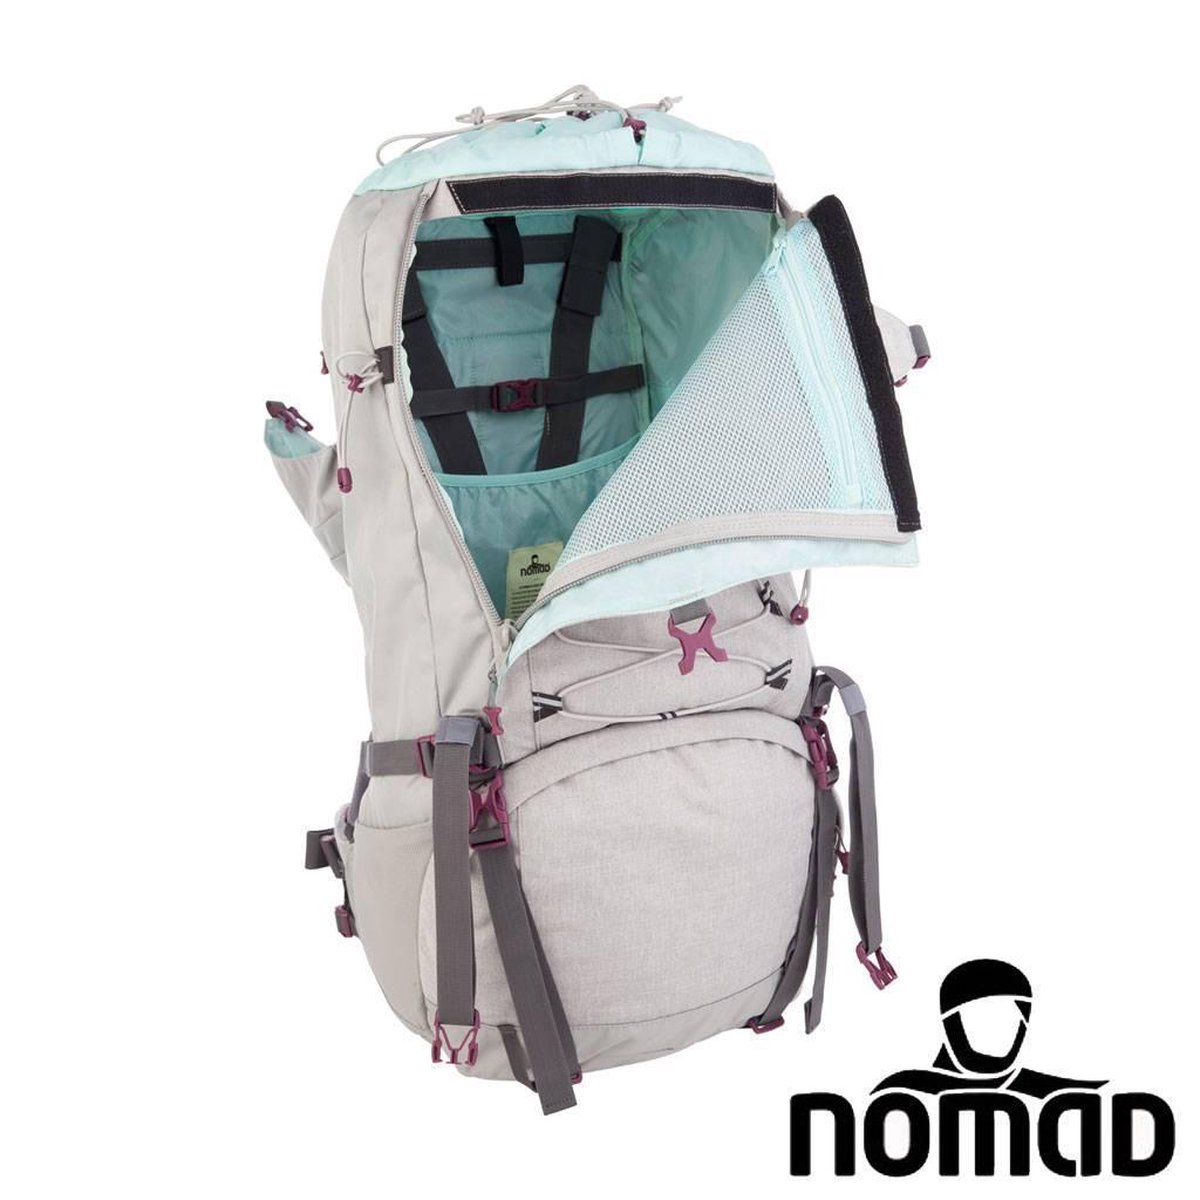 Nomad Sahara 65 Travel Backpack Rugzak - Dames - - Grey |